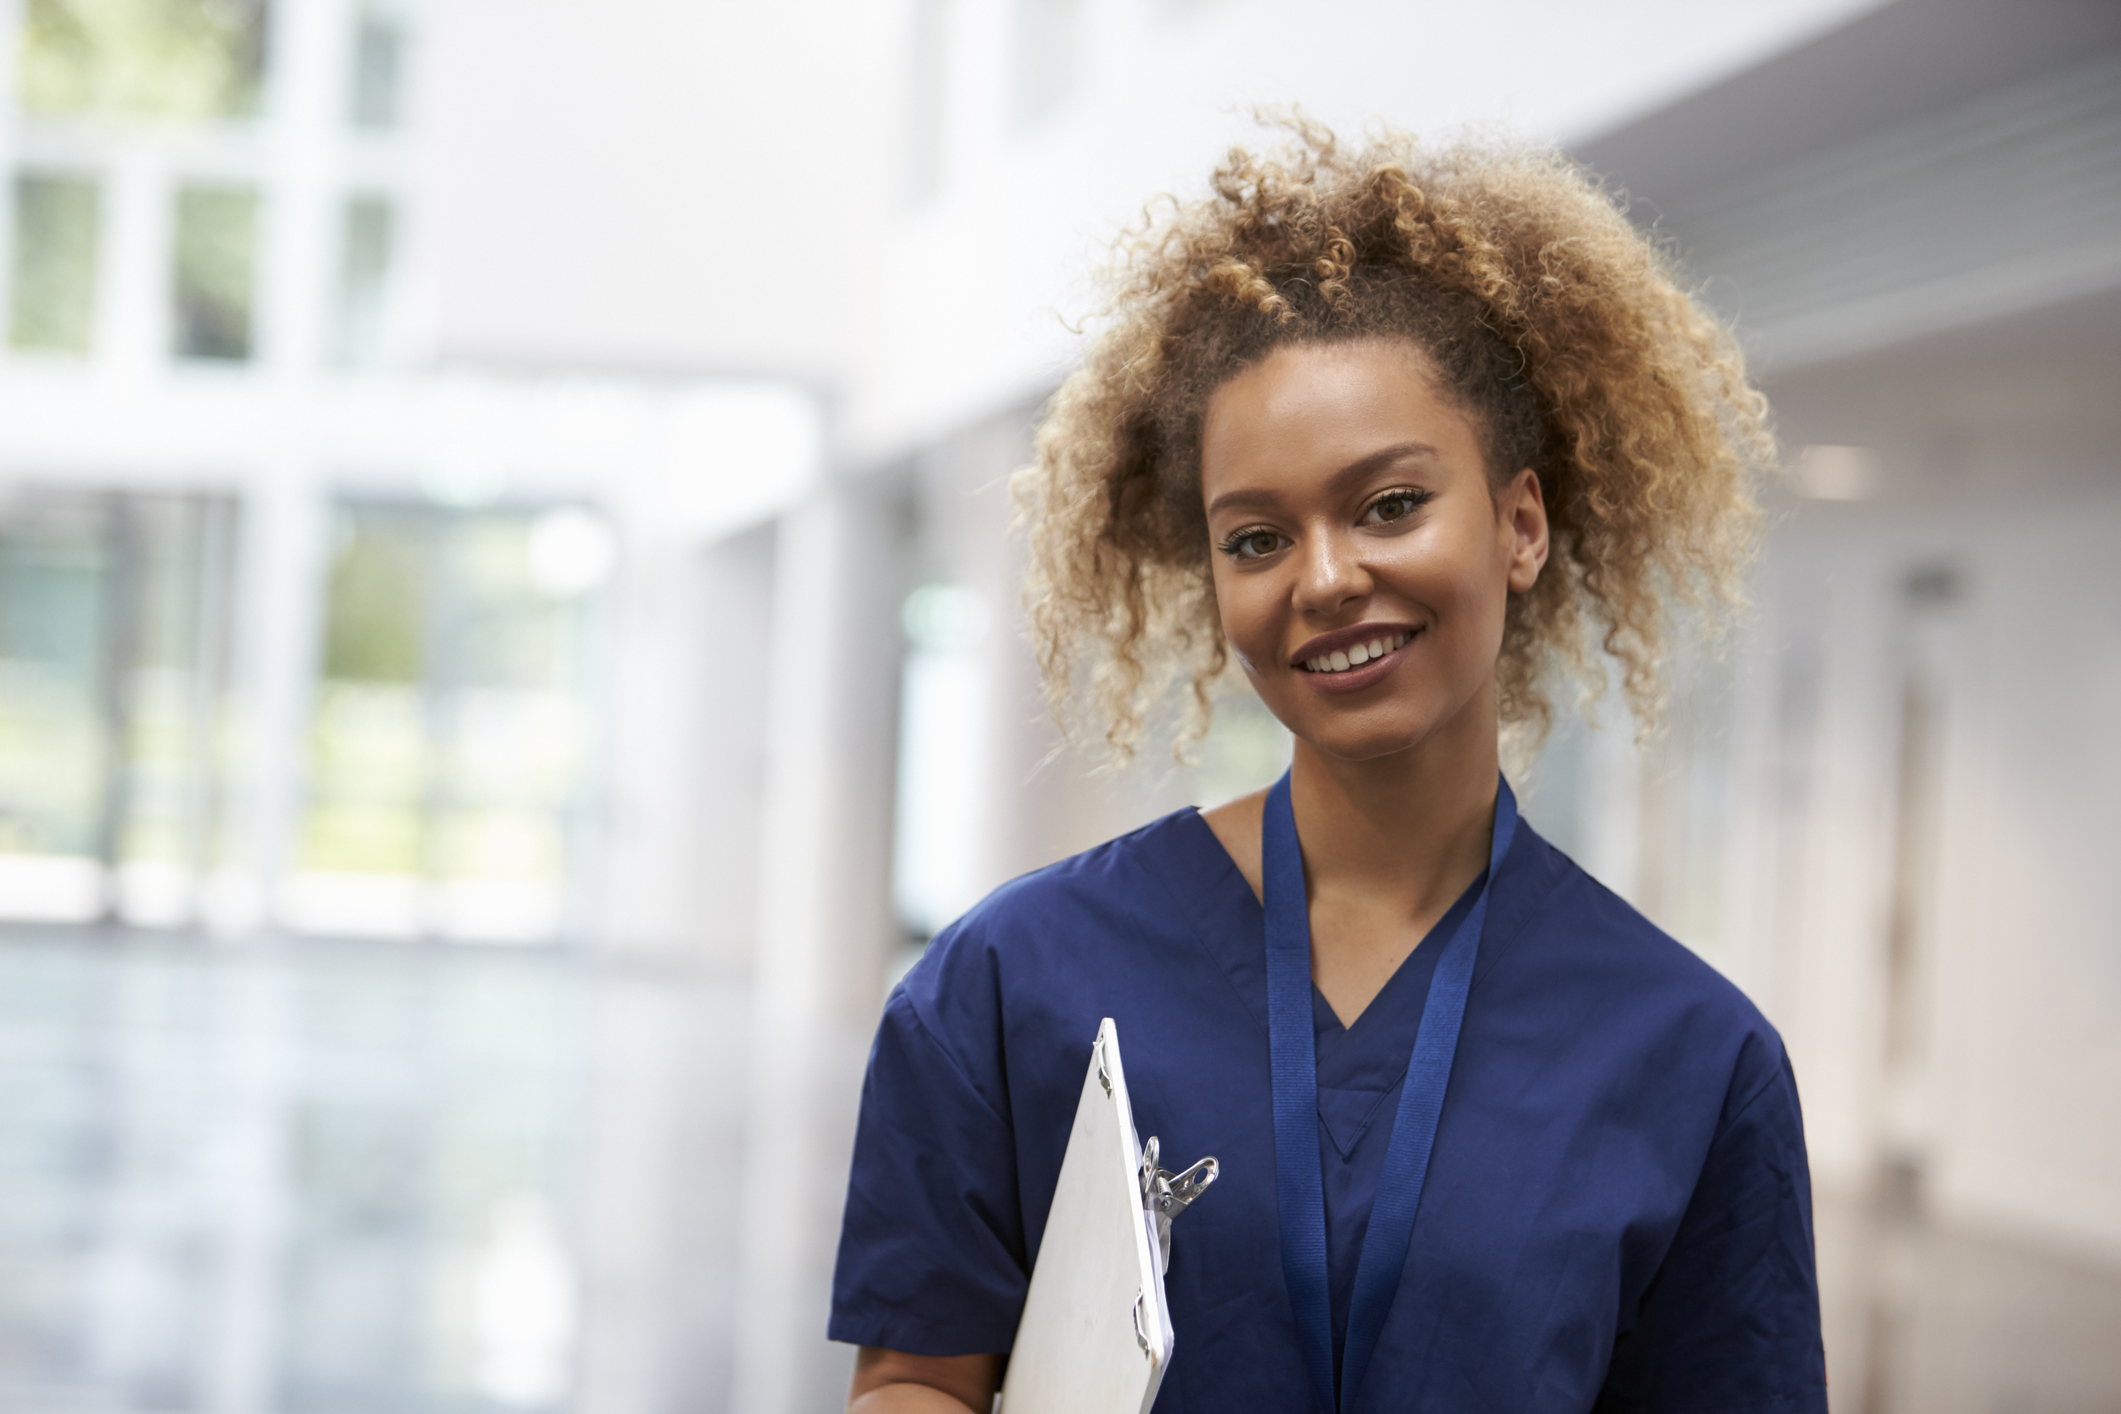 travel nursing vs. staff nursing - featured image of nurse in hospital lobby